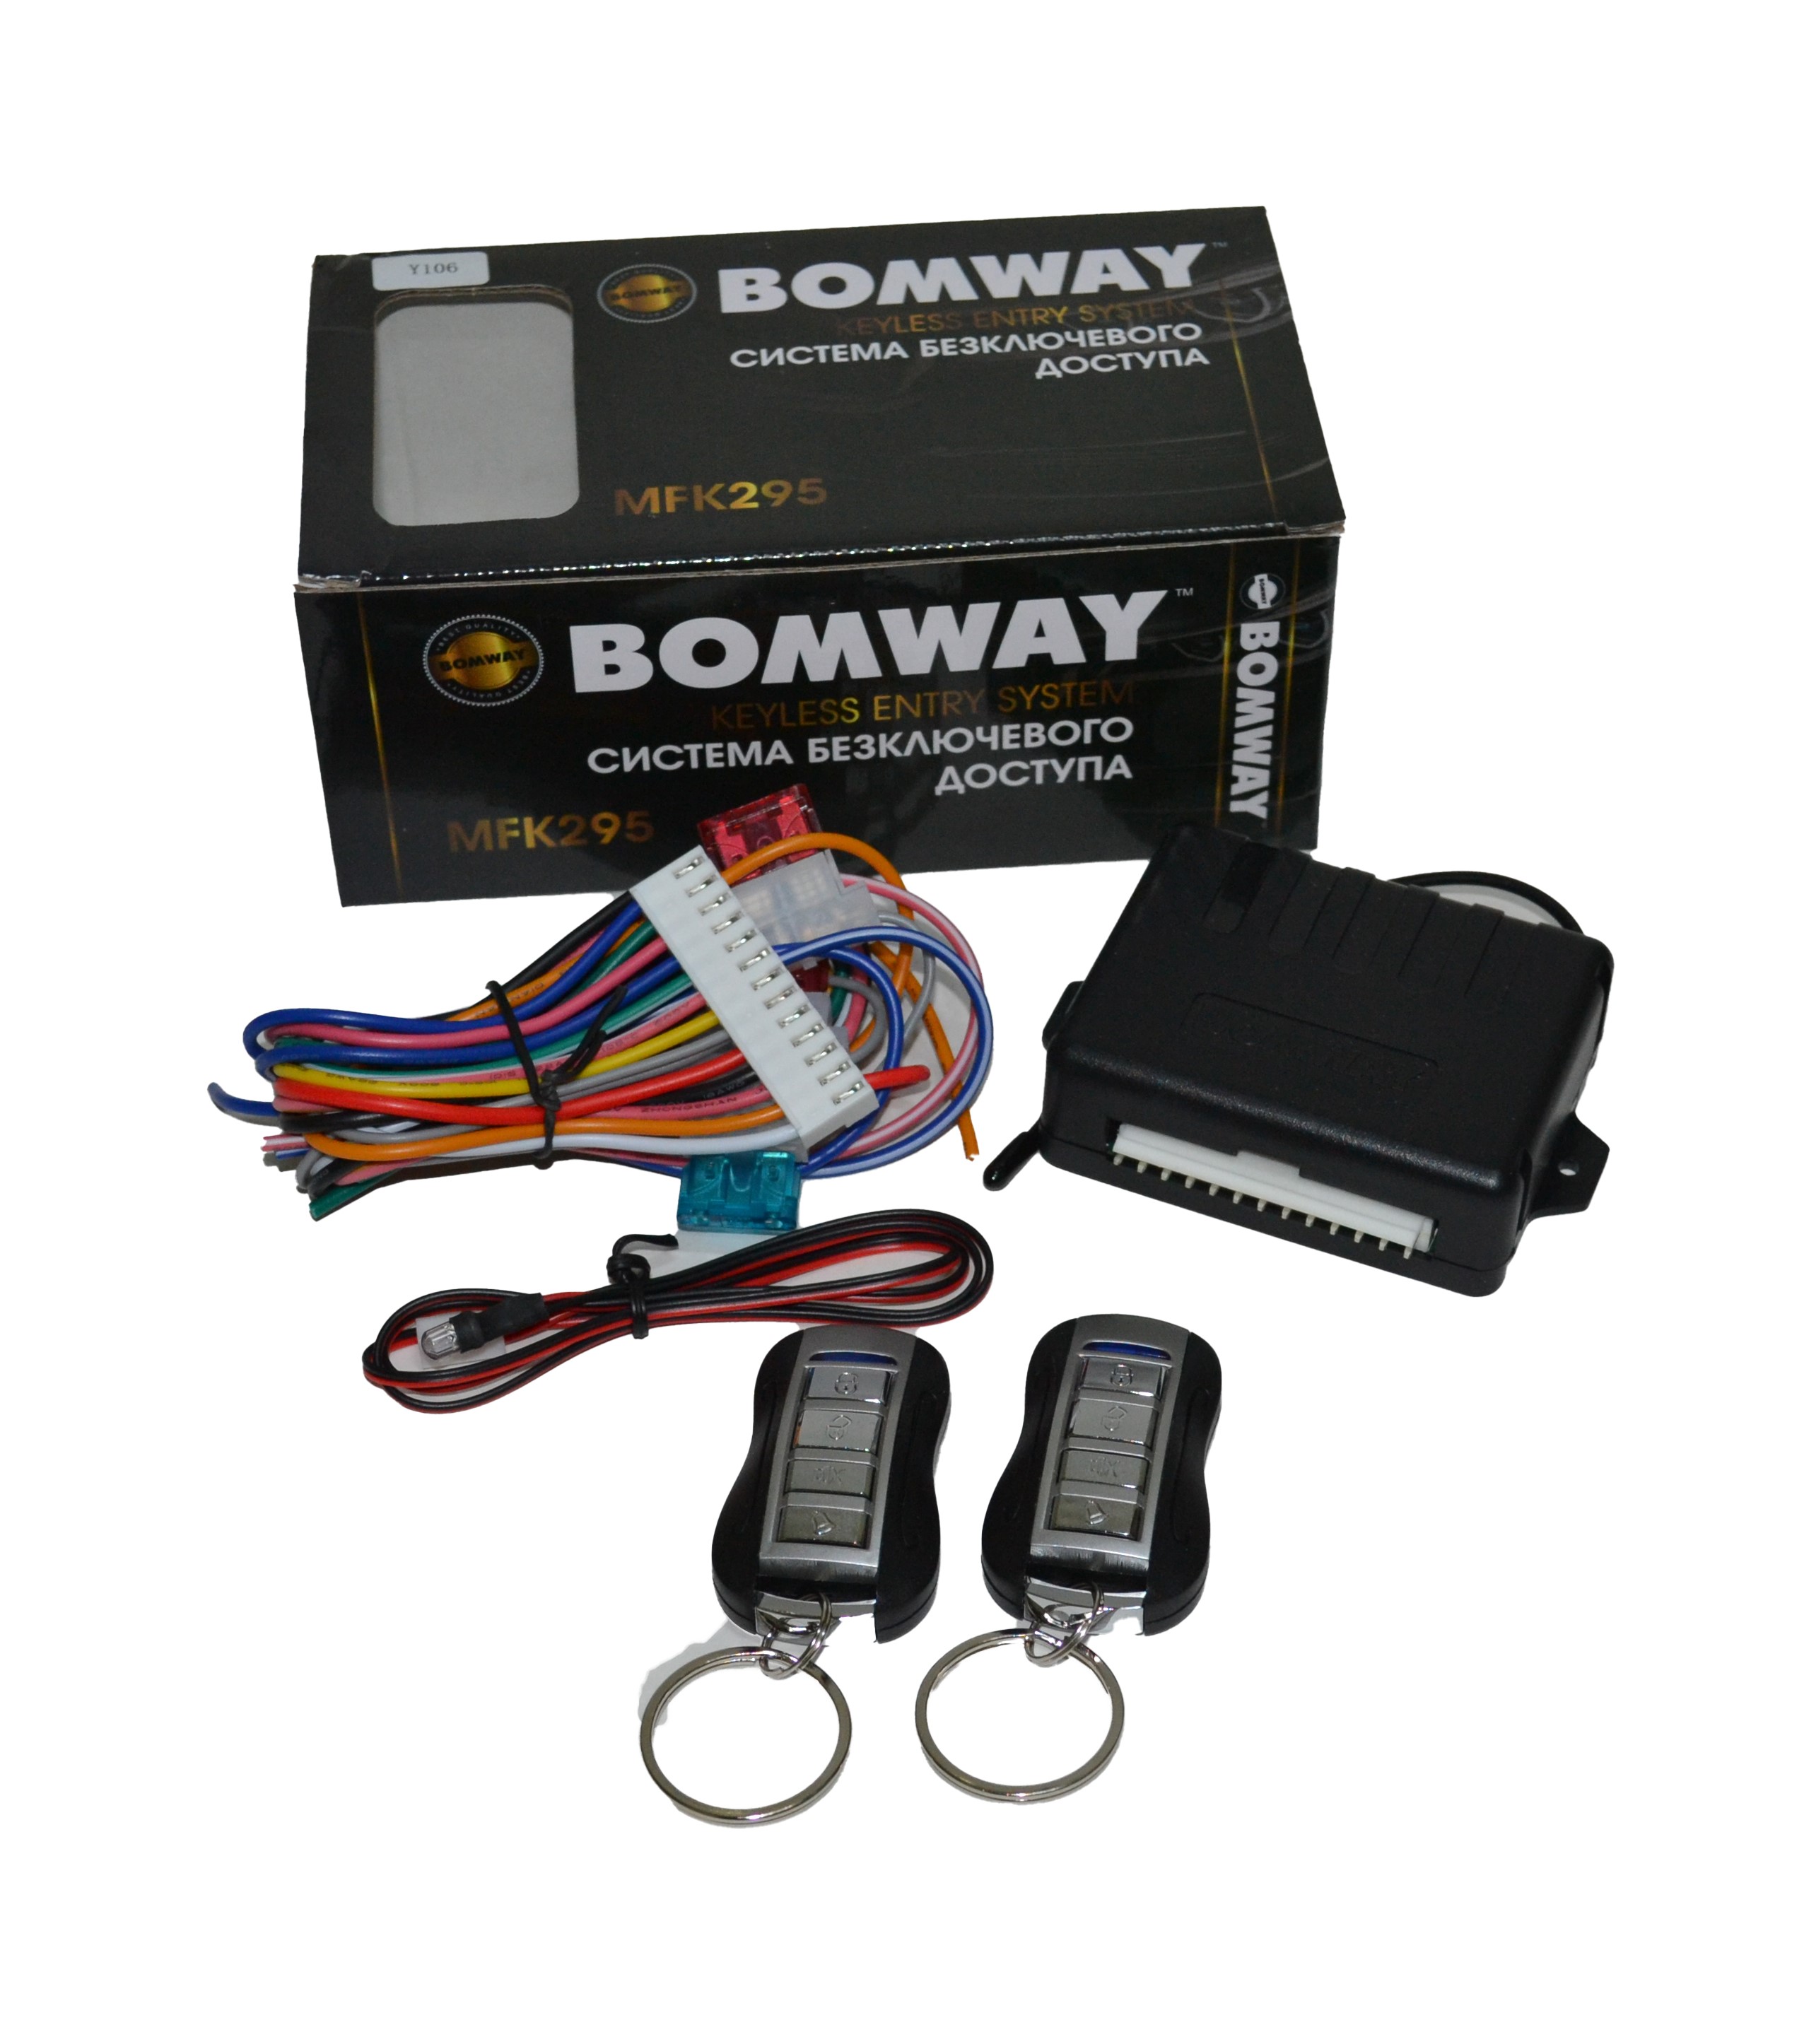 Комплект безключ. доступа с брелками BOMWAY BCS-MFK295-Y106